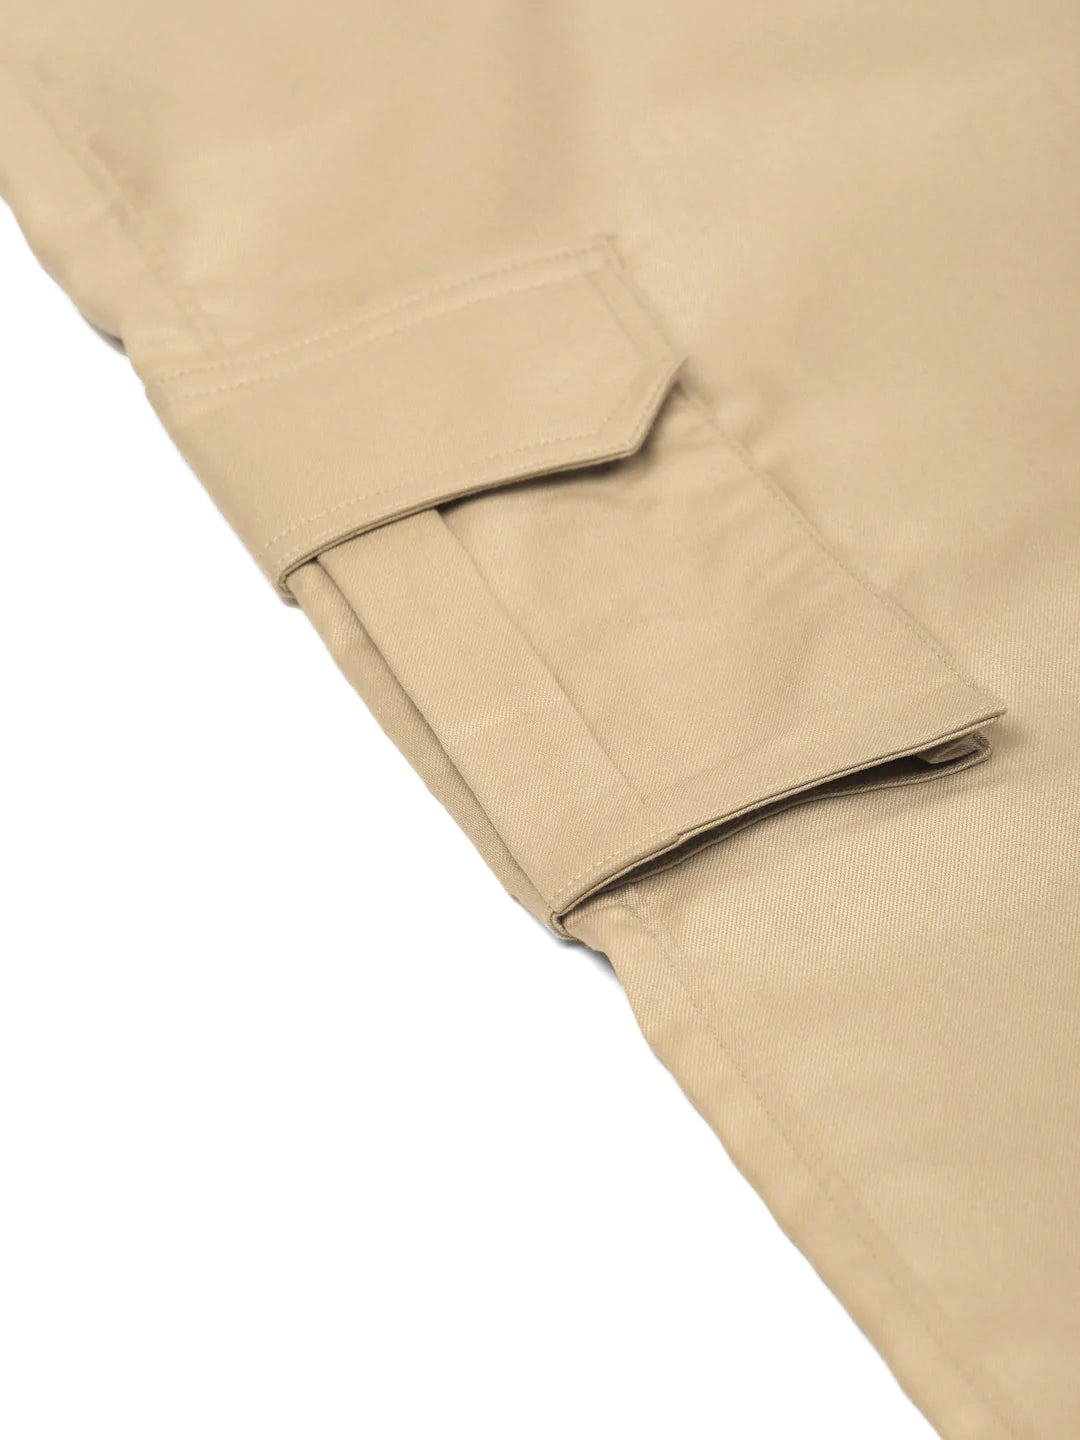 Jainish Men's Casual Cotton Solid Cargo Pants ( KGP 154 Beige )